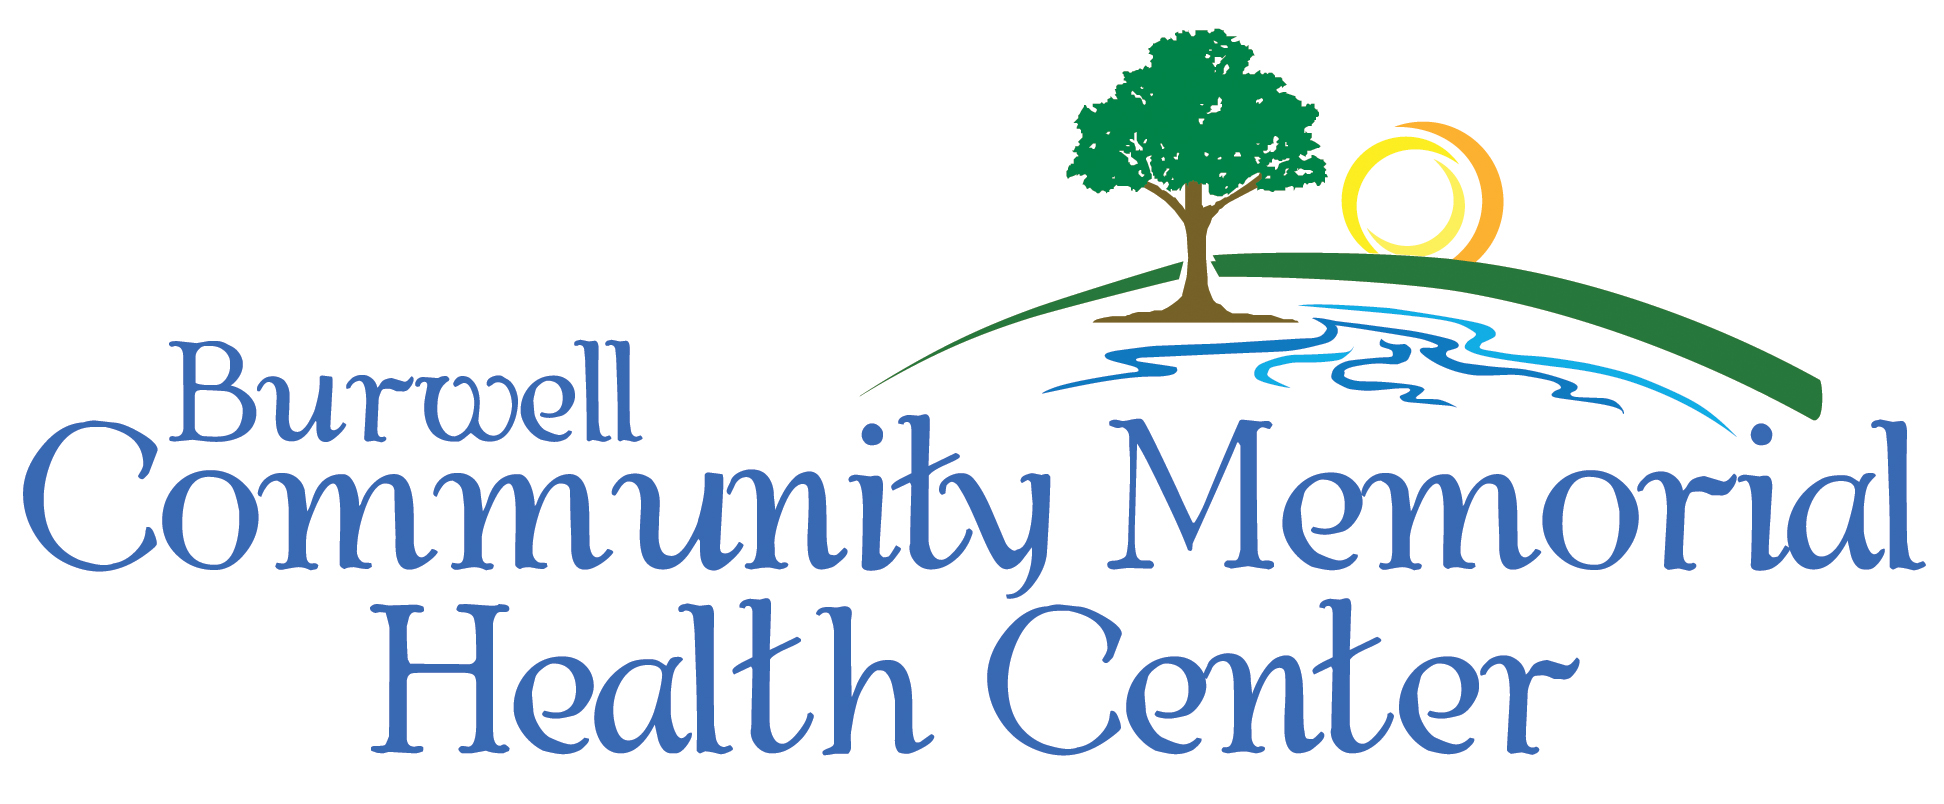 Community Memorial Health Center